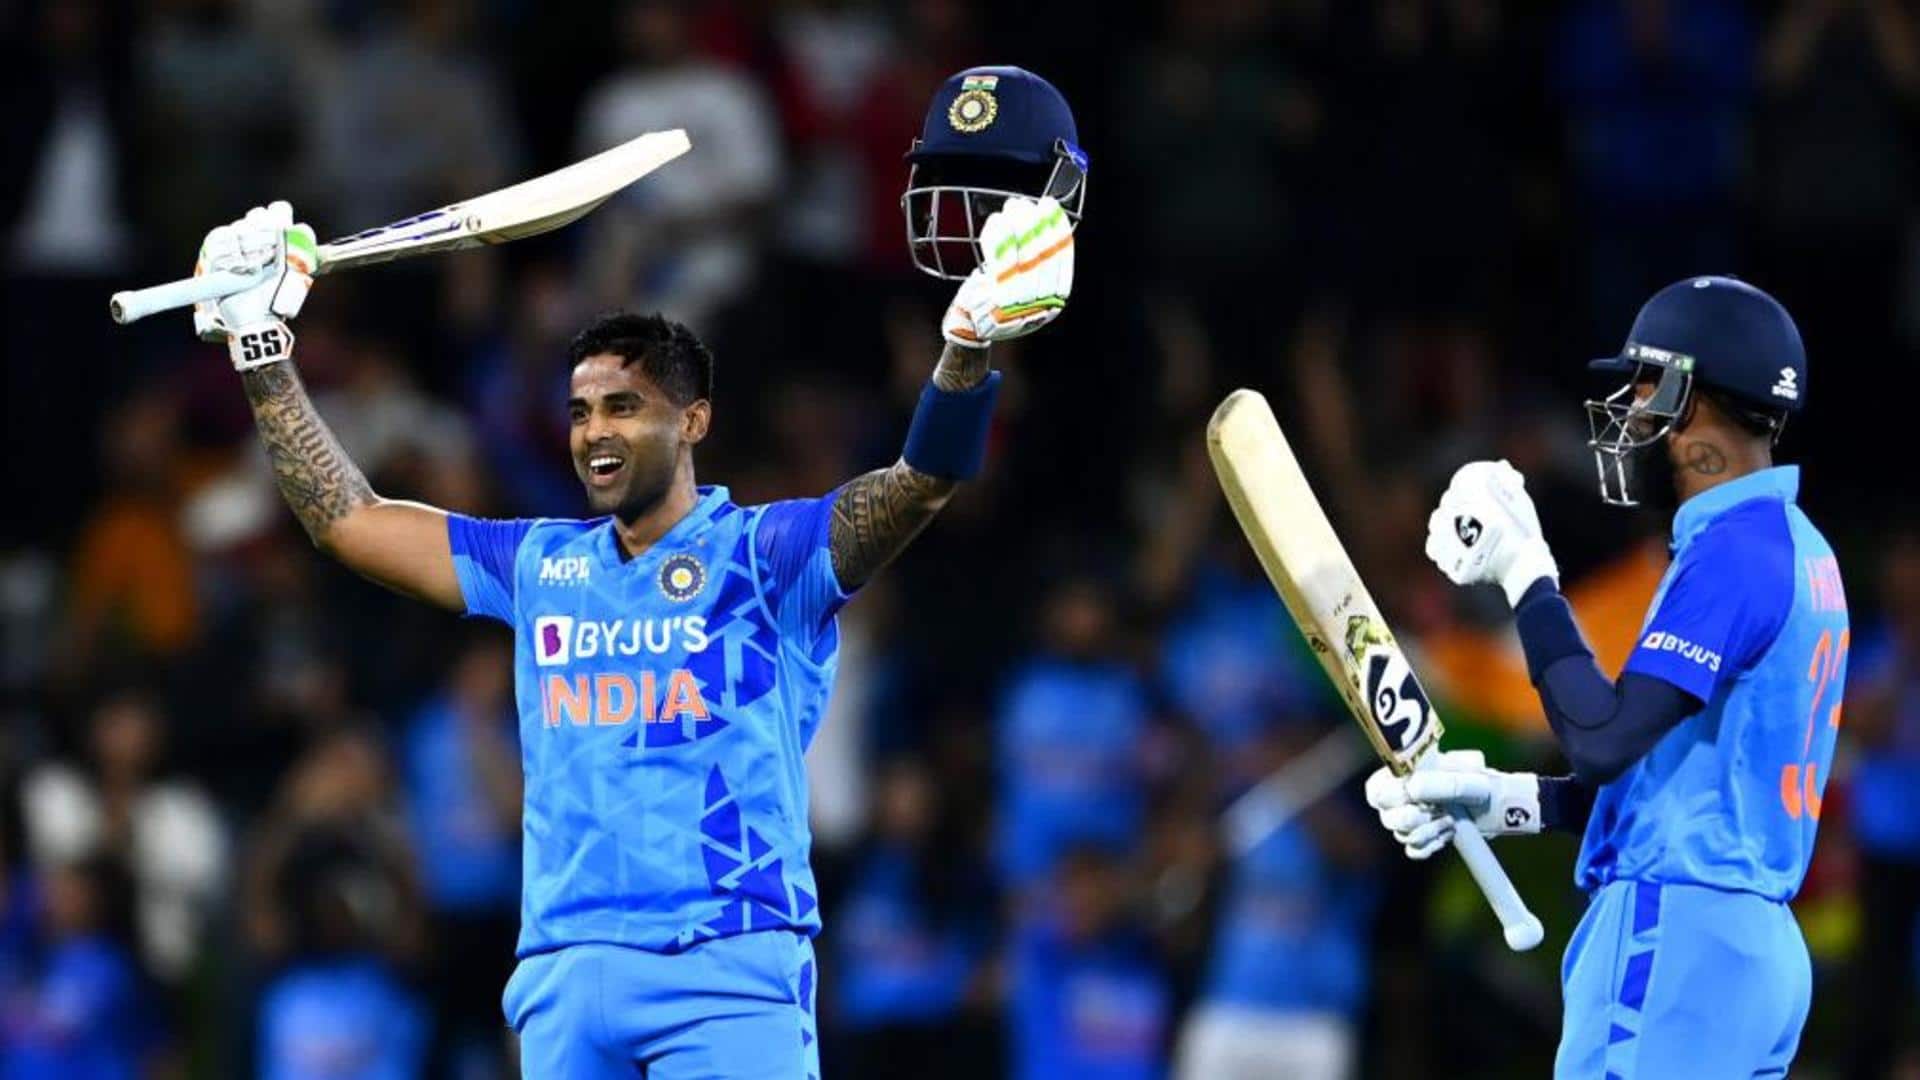 Suryakumar Yadav slams his 2nd T20I century: Key stats